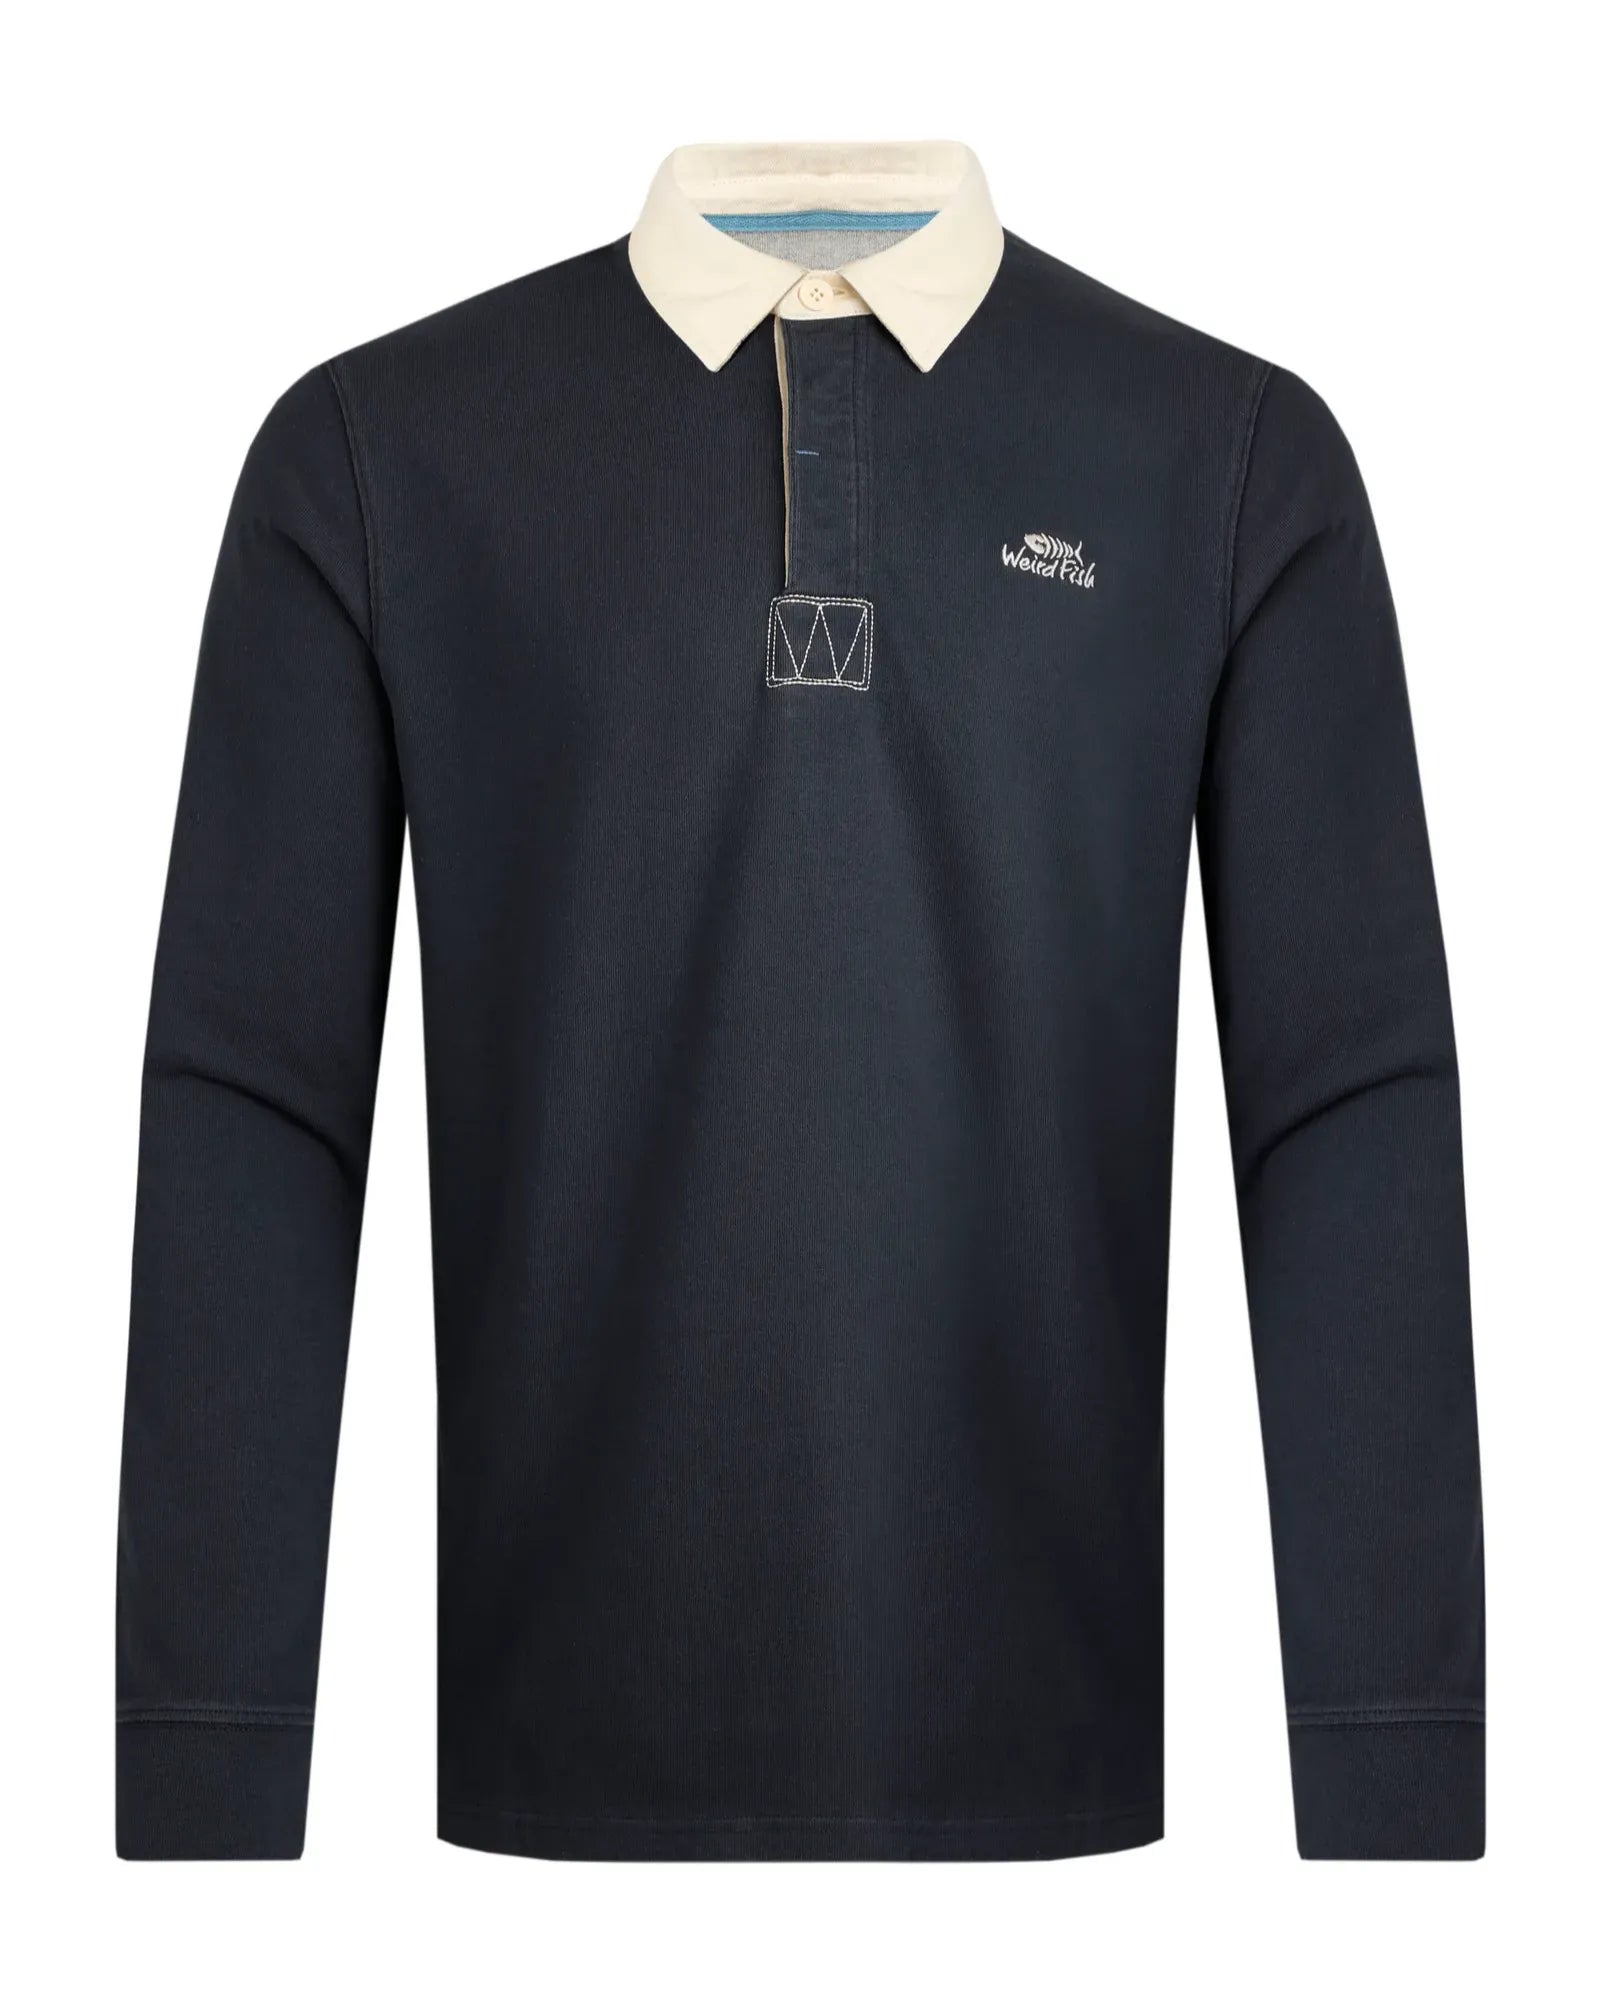 Fulshaw Organic Long Sleeve Rugby Shirt - Navy Blue